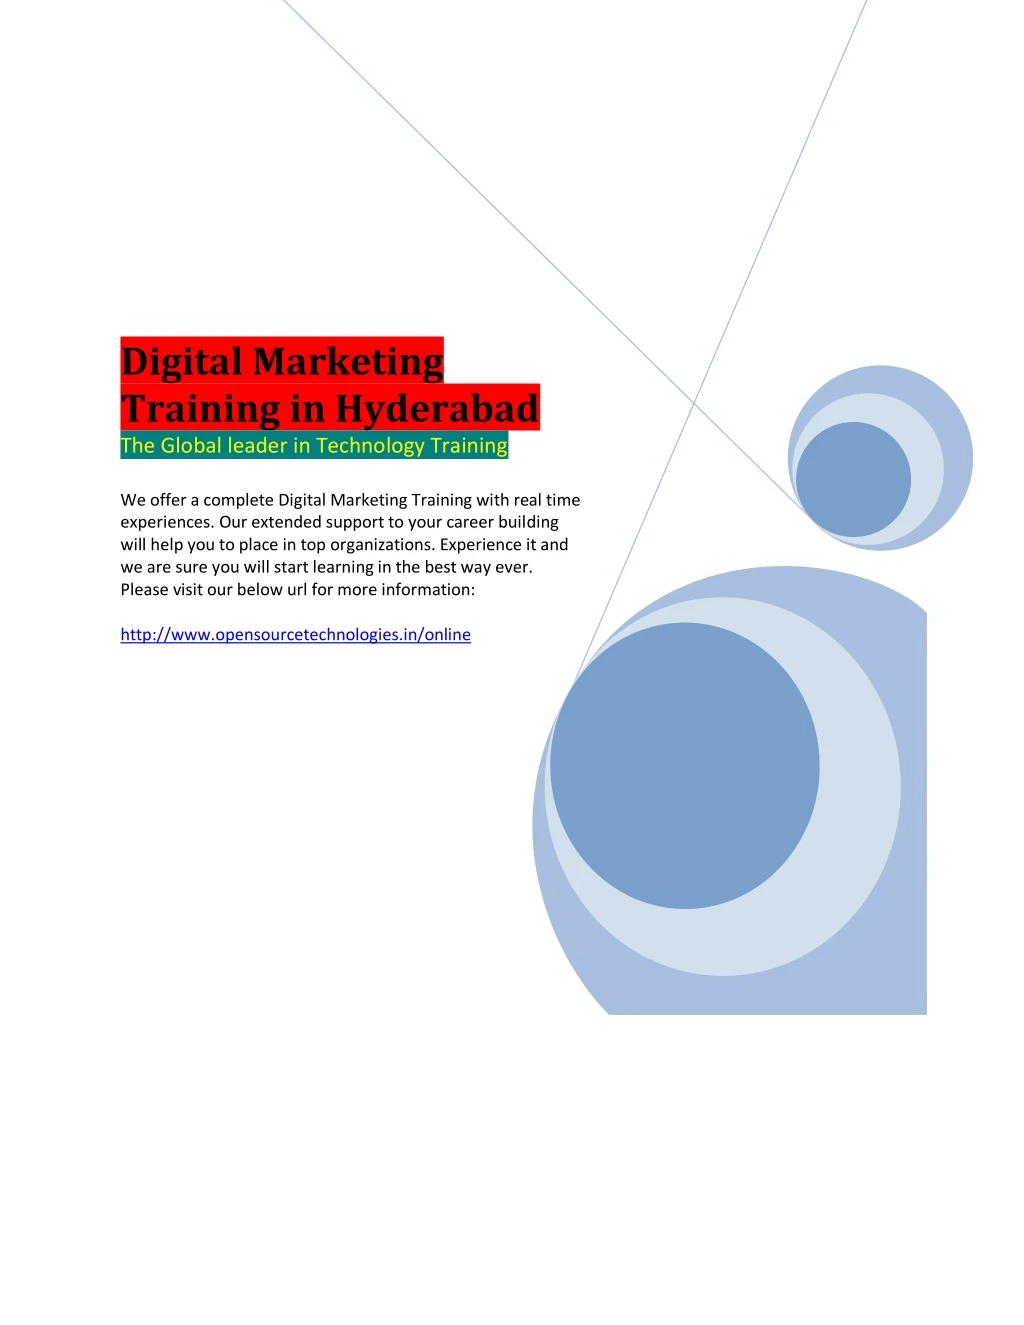 digital marketing training in hyderabad